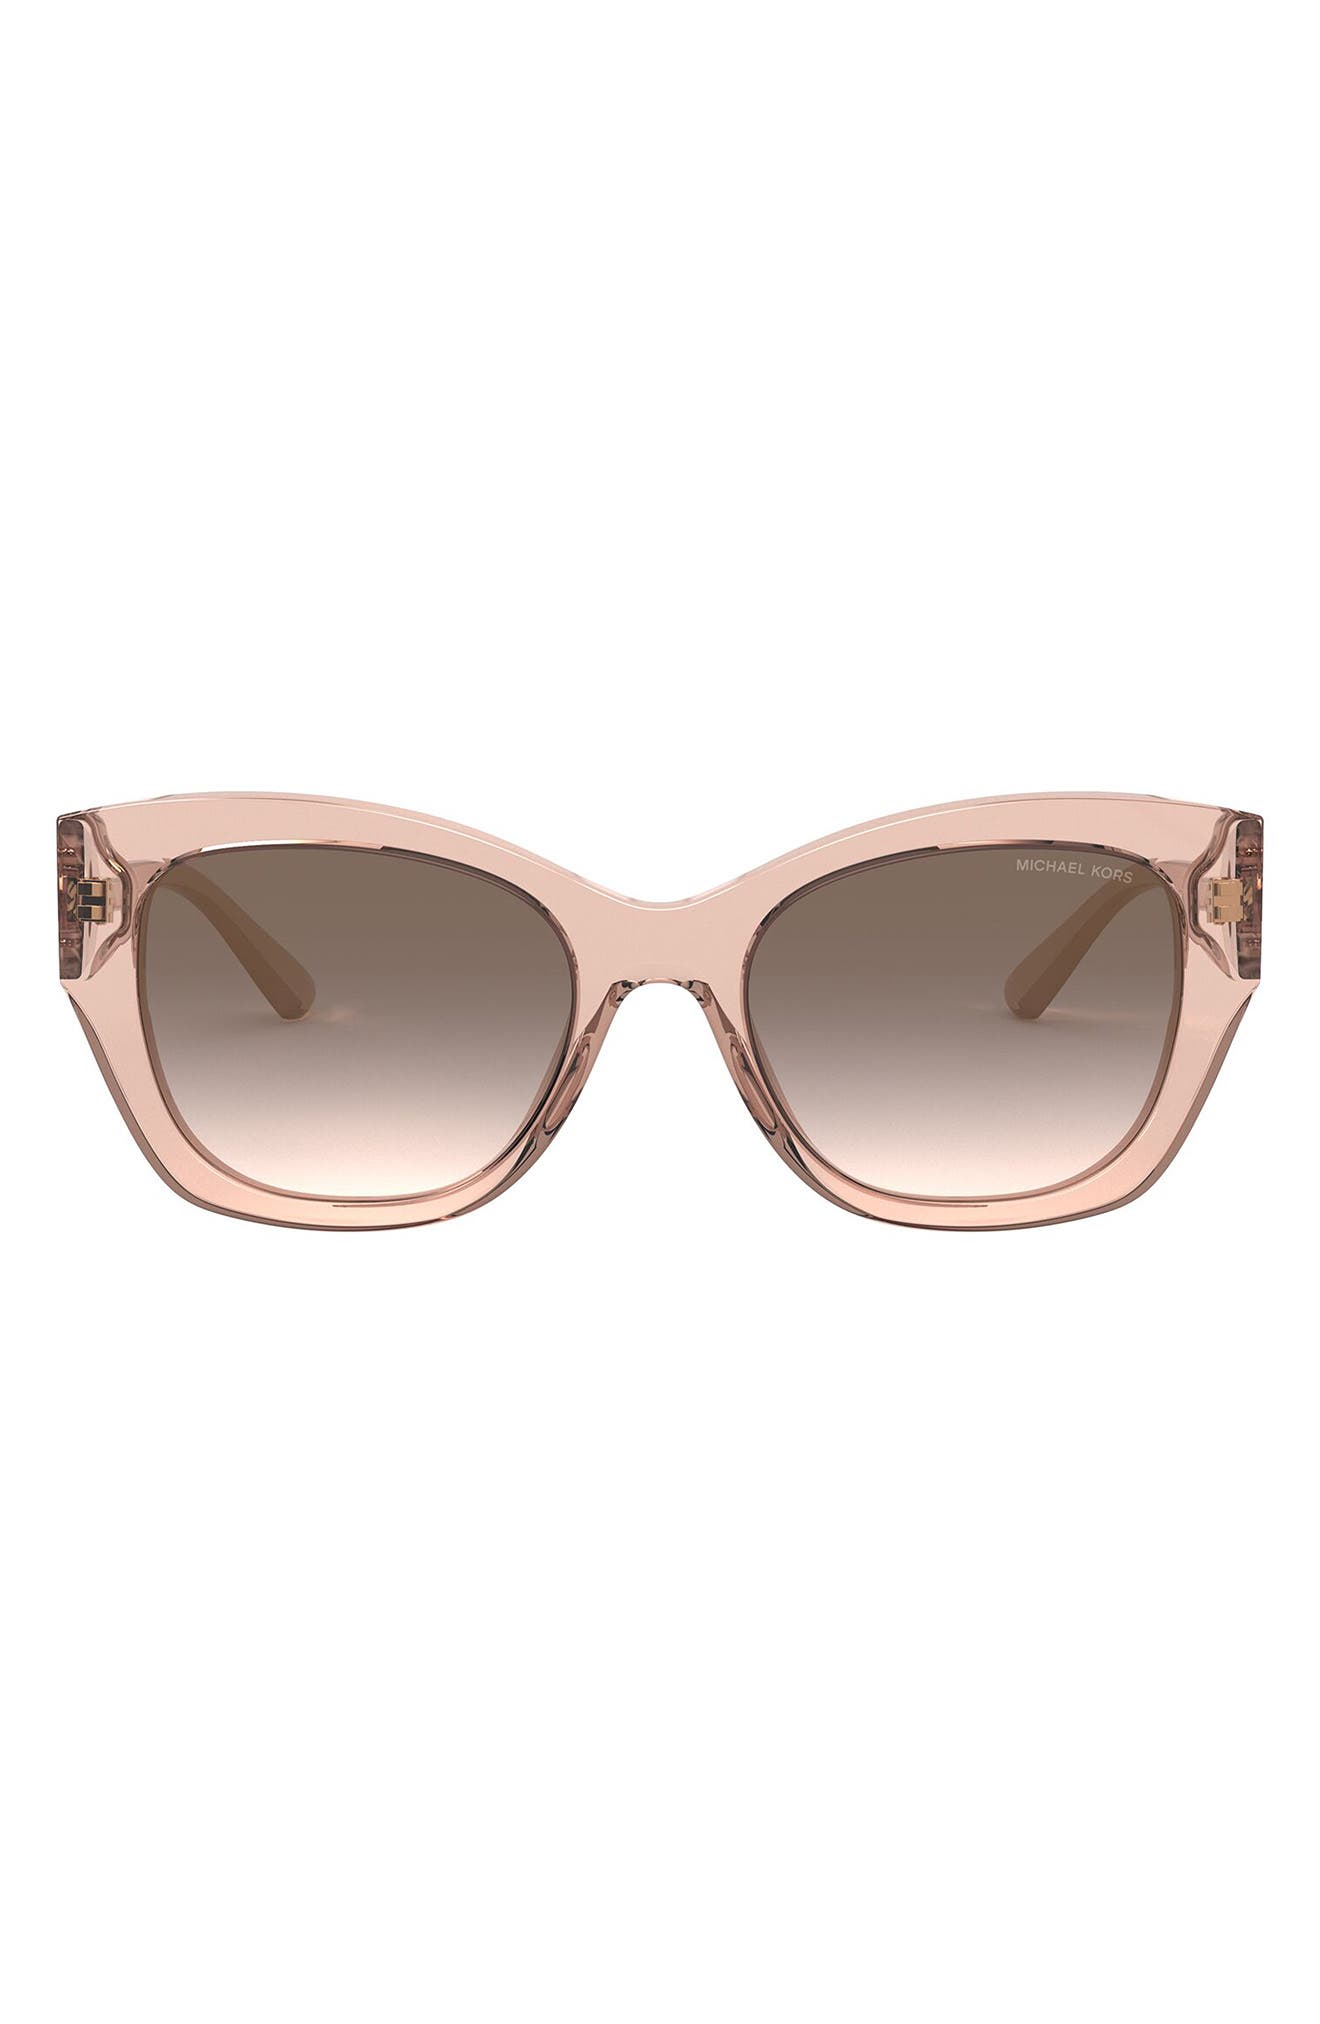 Michael Kors 53mm Gradient Square Sunglasses in Camila Rose/grey Pink Gradient at Nordstrom